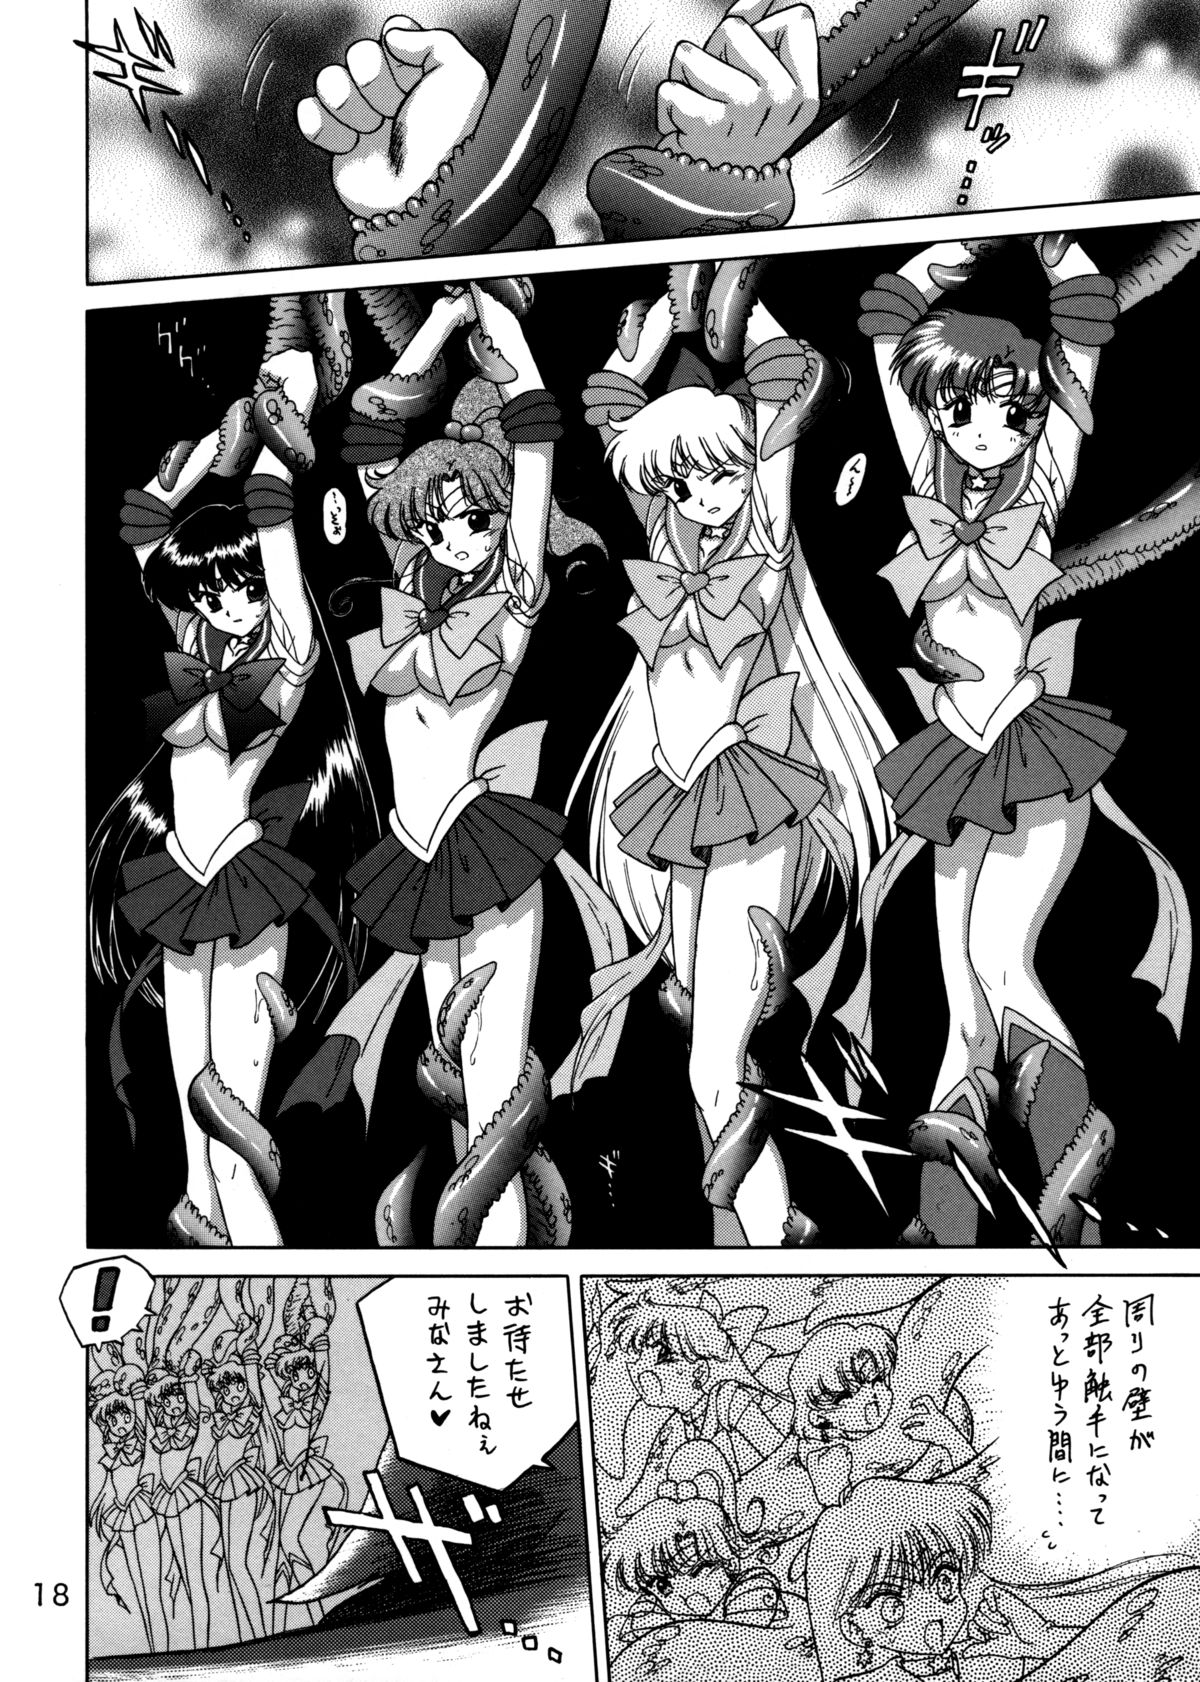 (C62) [Black Dog (Kuroinu Juu)] Submission Sailorstars (Bishoujo Senshi Sailor Moon) (C62) [Black Dog (黒犬獣)] Submission Sailorstars (美少女戦士セーラームーン)